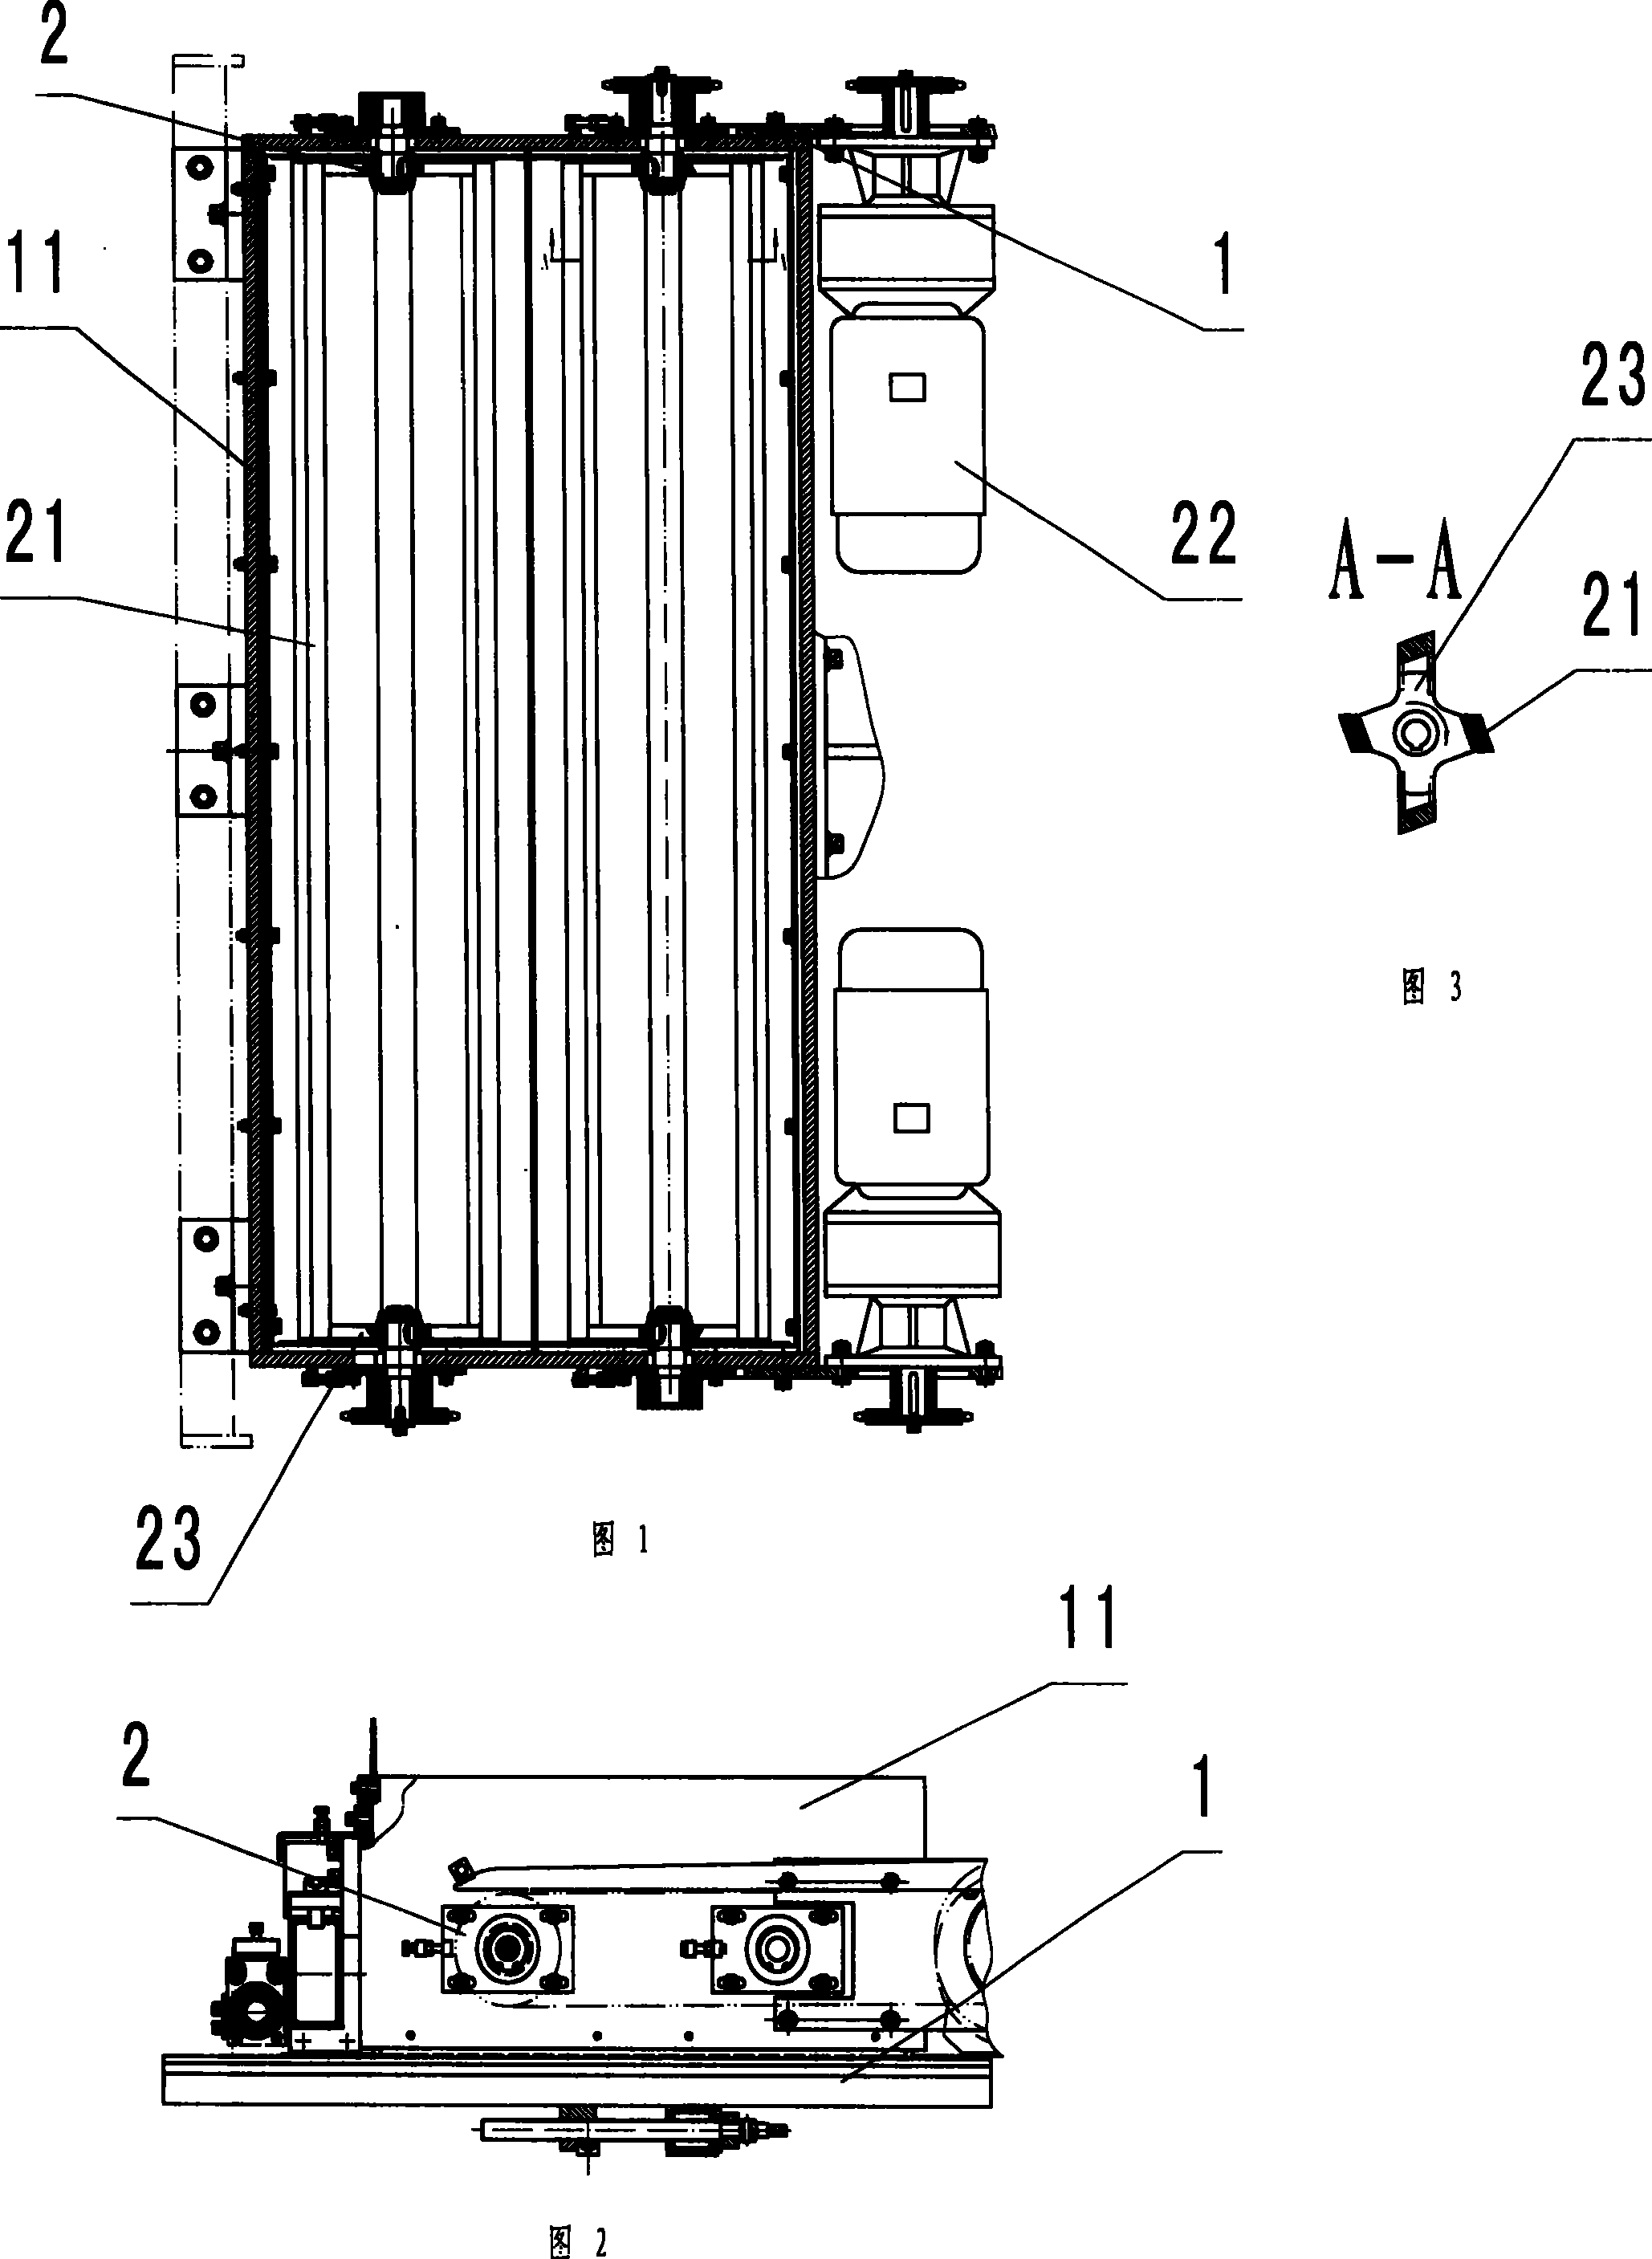 Brick-making machine cloth mechanism with material stirring mechanism